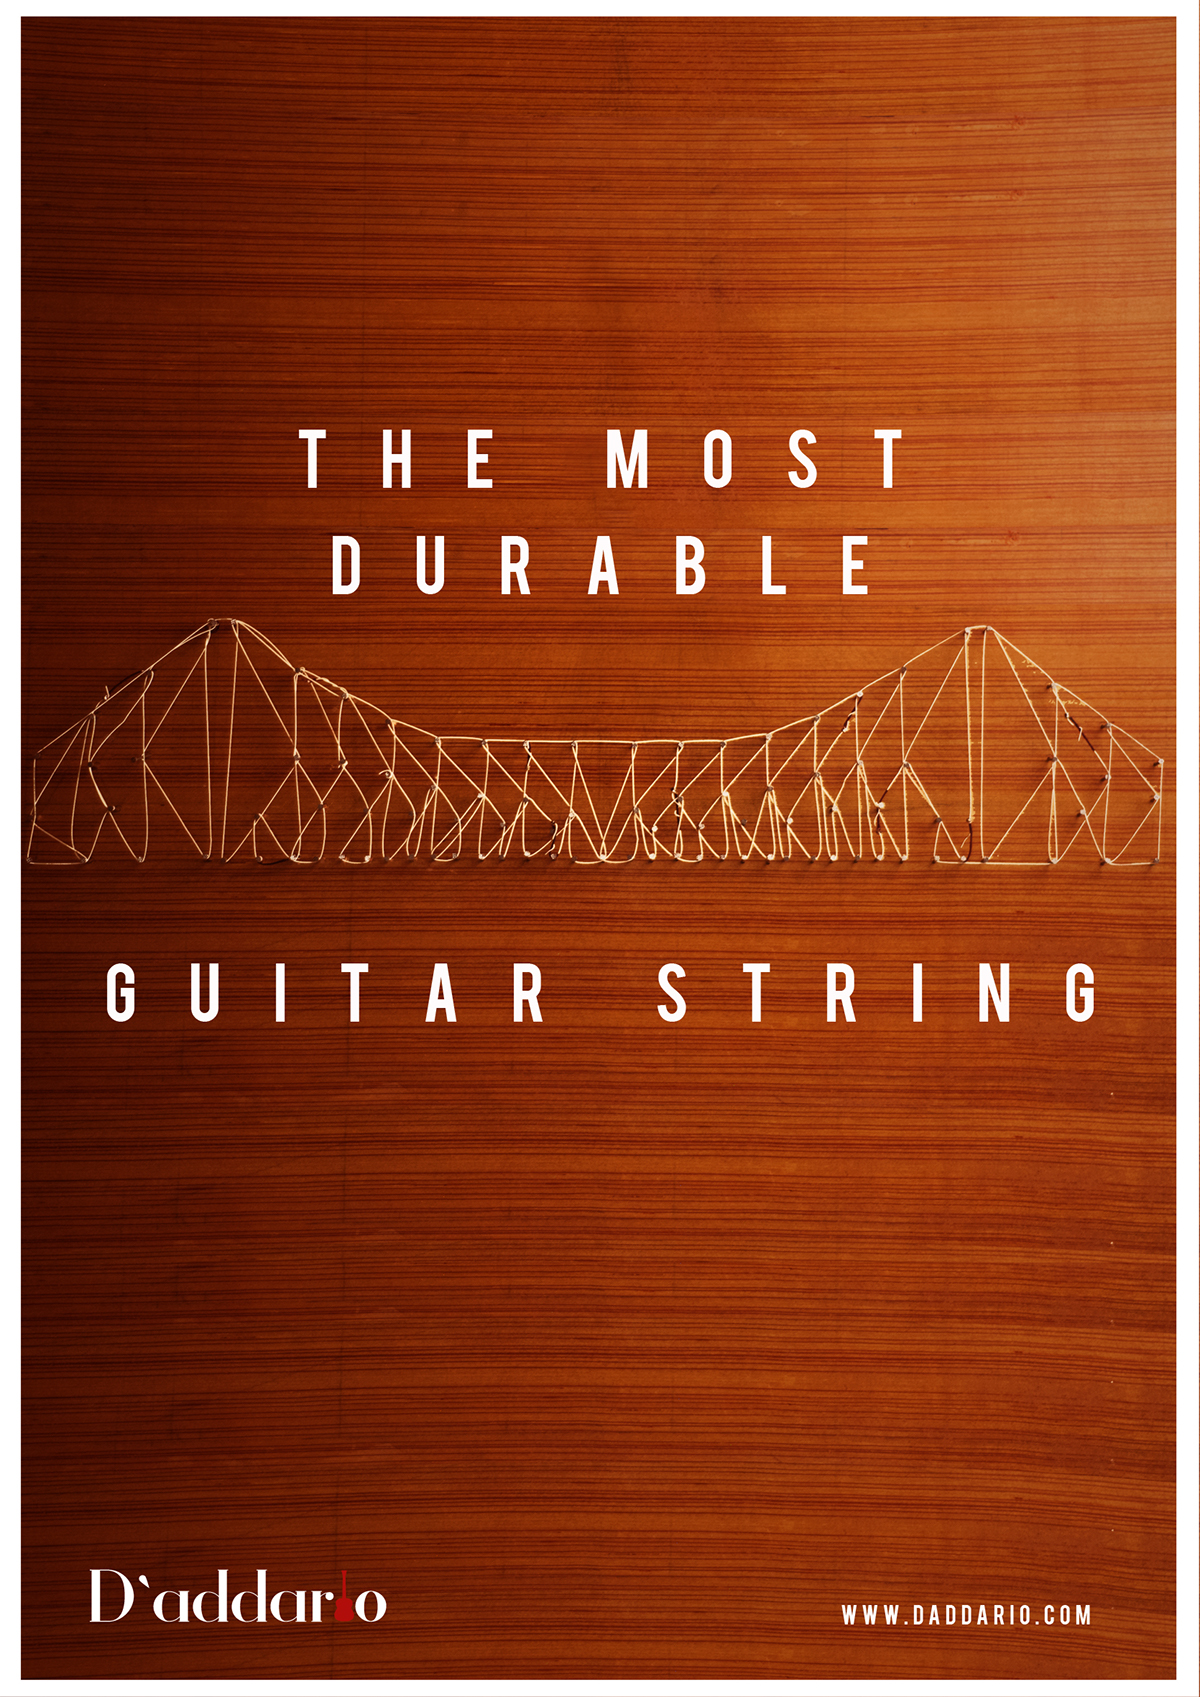 d'addario guitar string Woodentexture